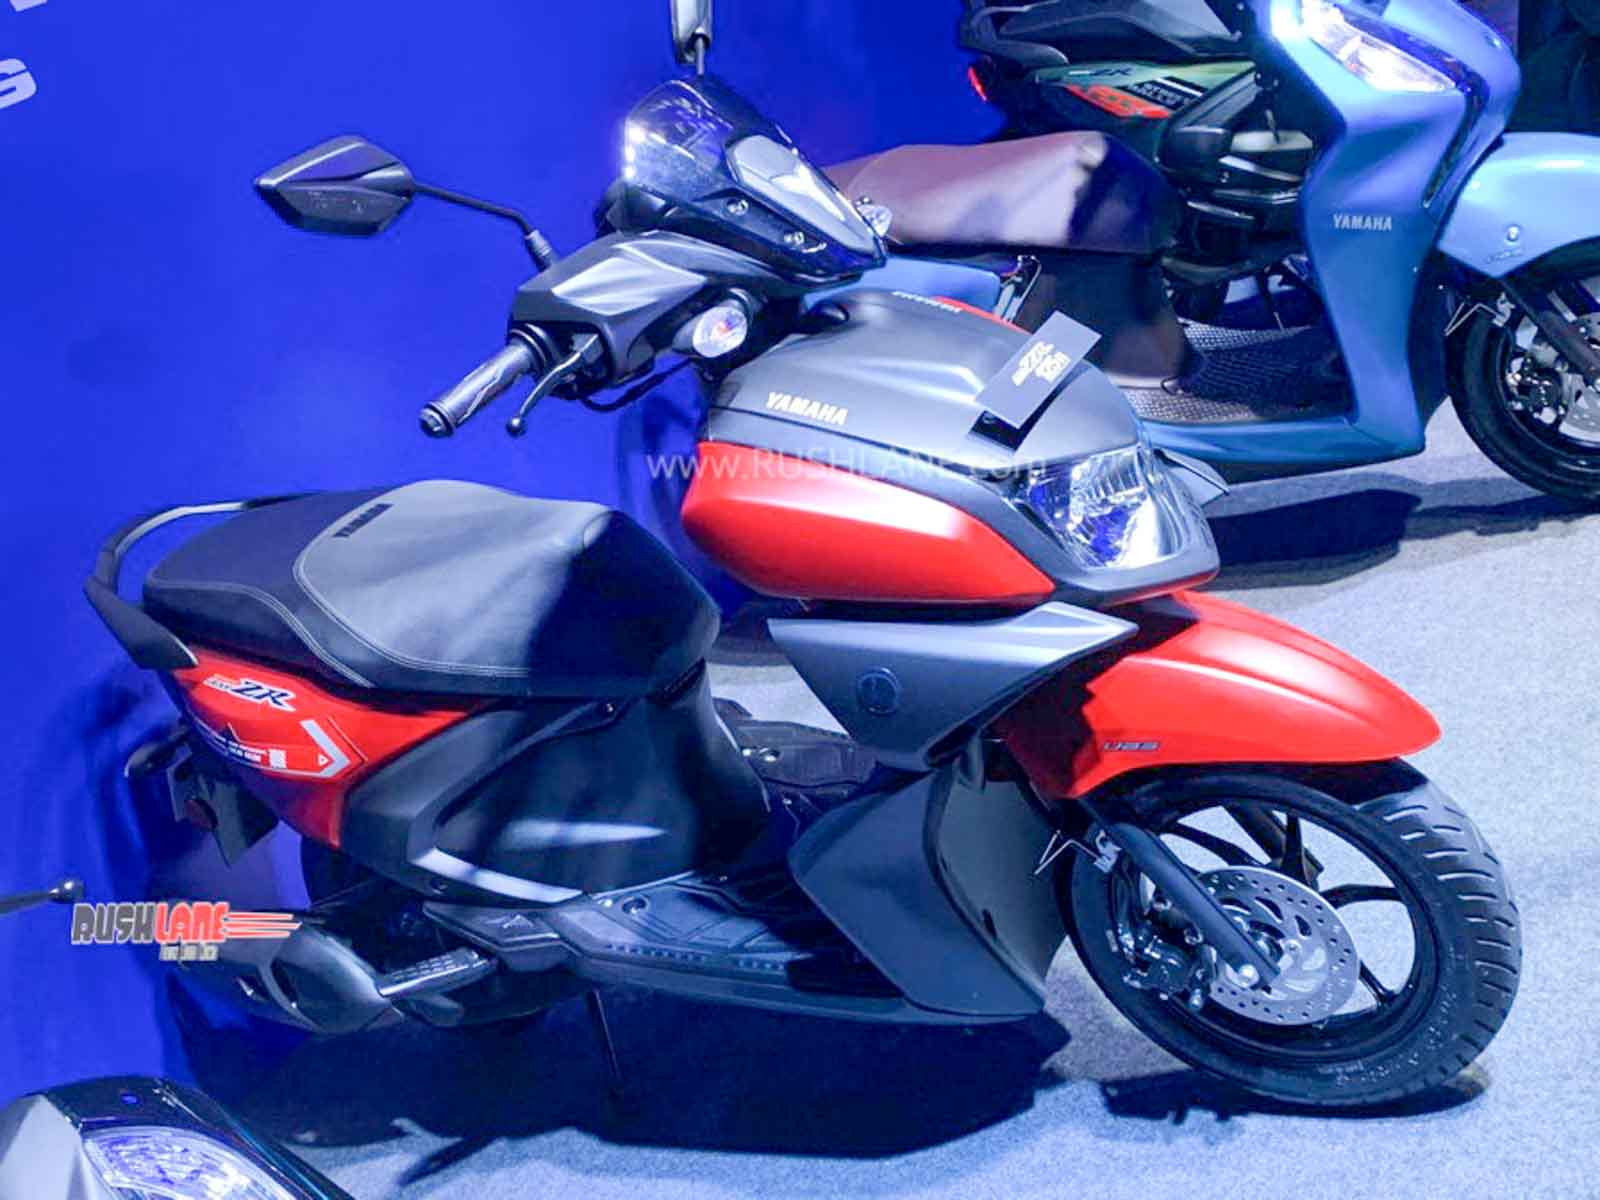 2020 Yamaha RayZR BS6 scooter